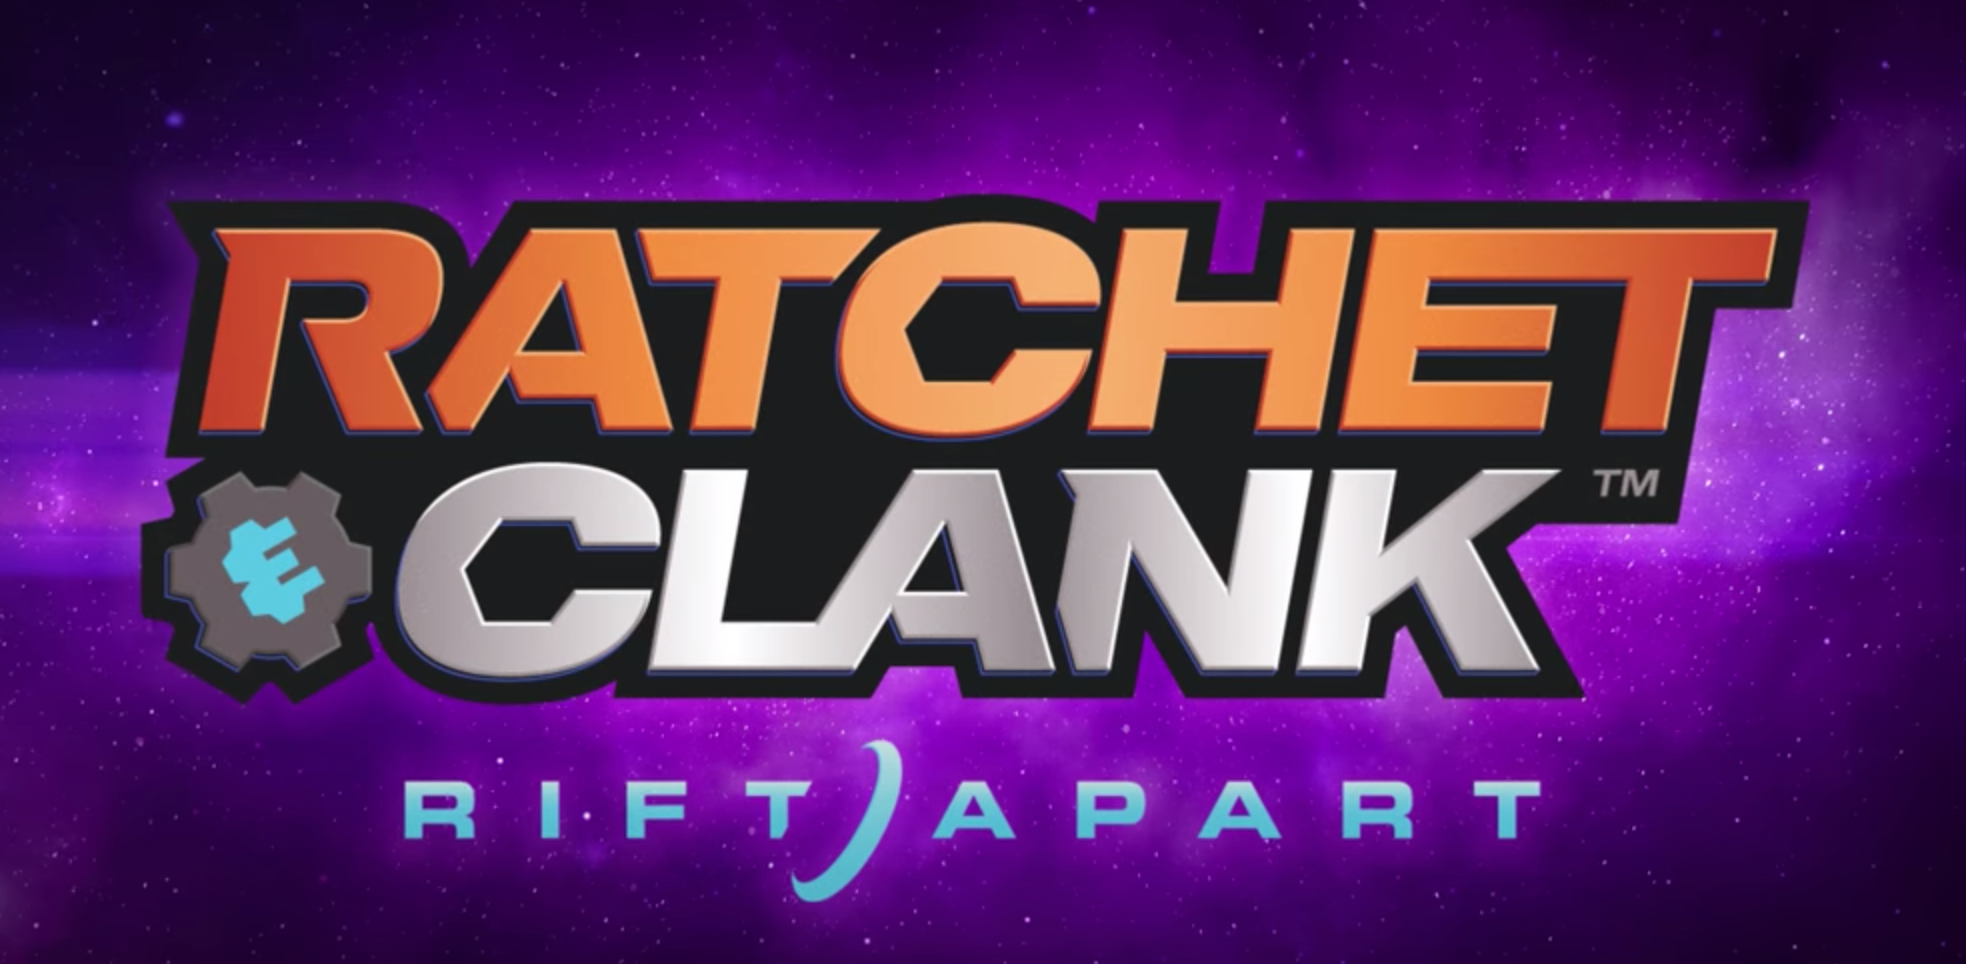 Ratchet & Clank: Rift Apart - Features Trailer